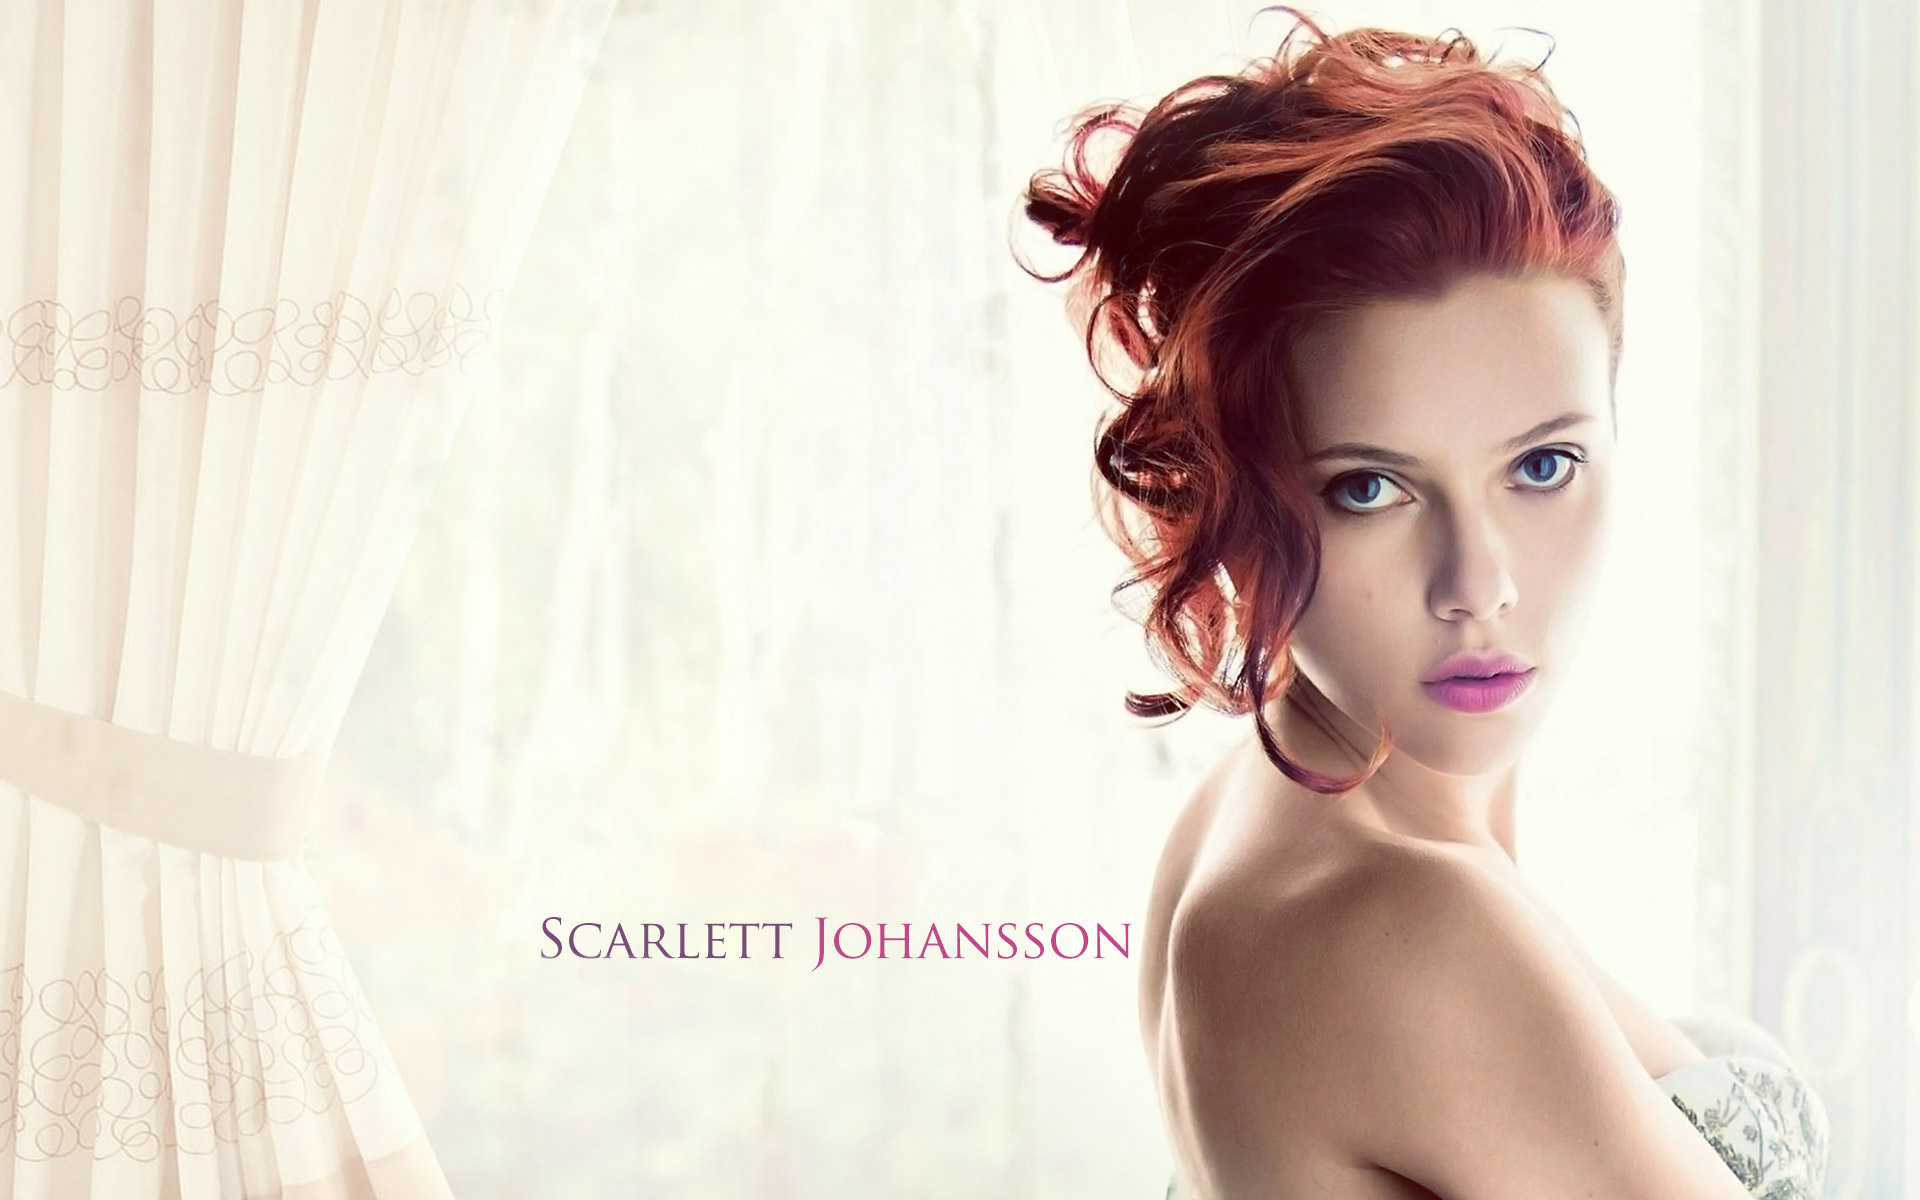 Scarlett Johansson Wallpaper All Are In Full High